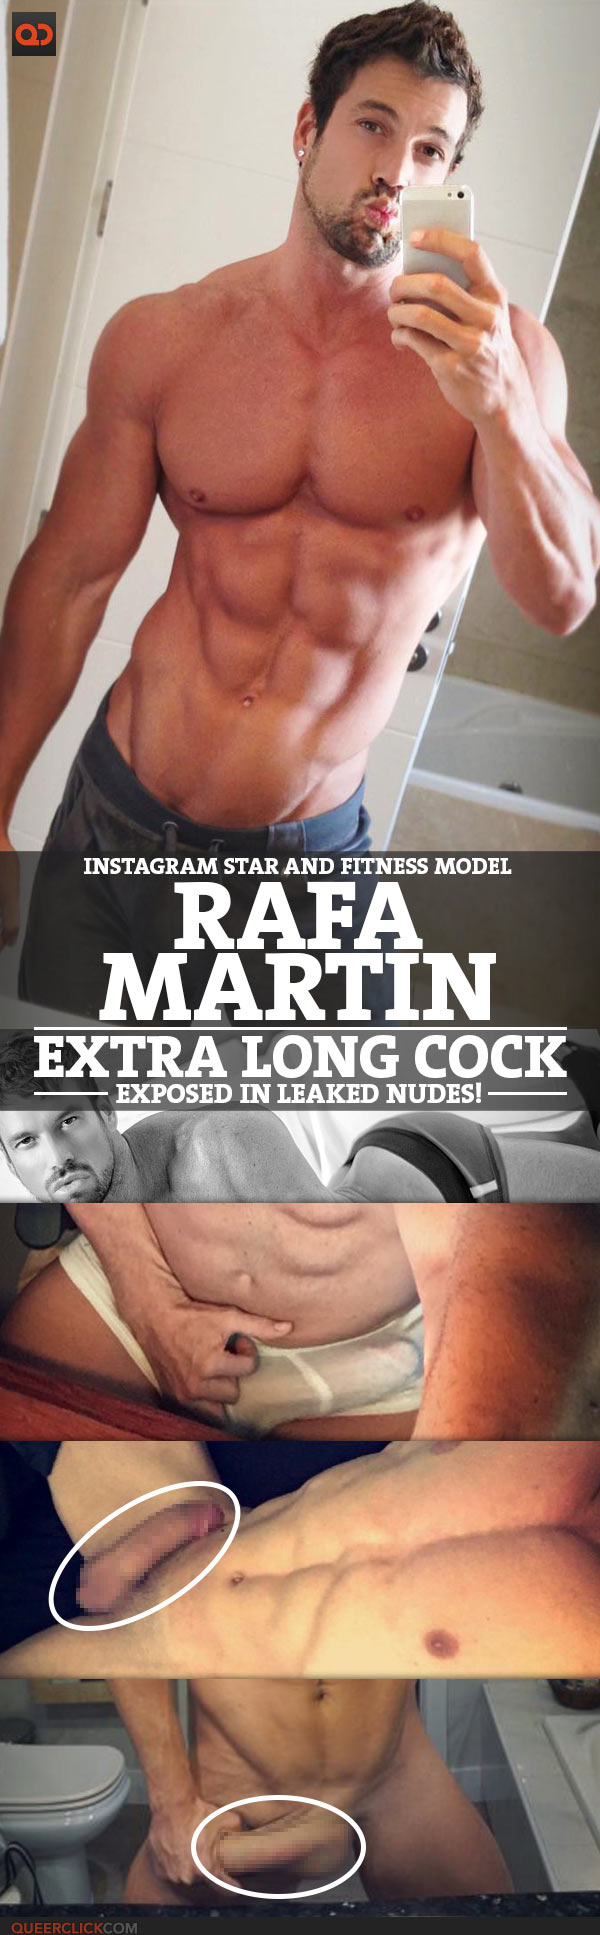 Rafa Martín Instagram Star And Fitness Model Extra Long Cock Exposed